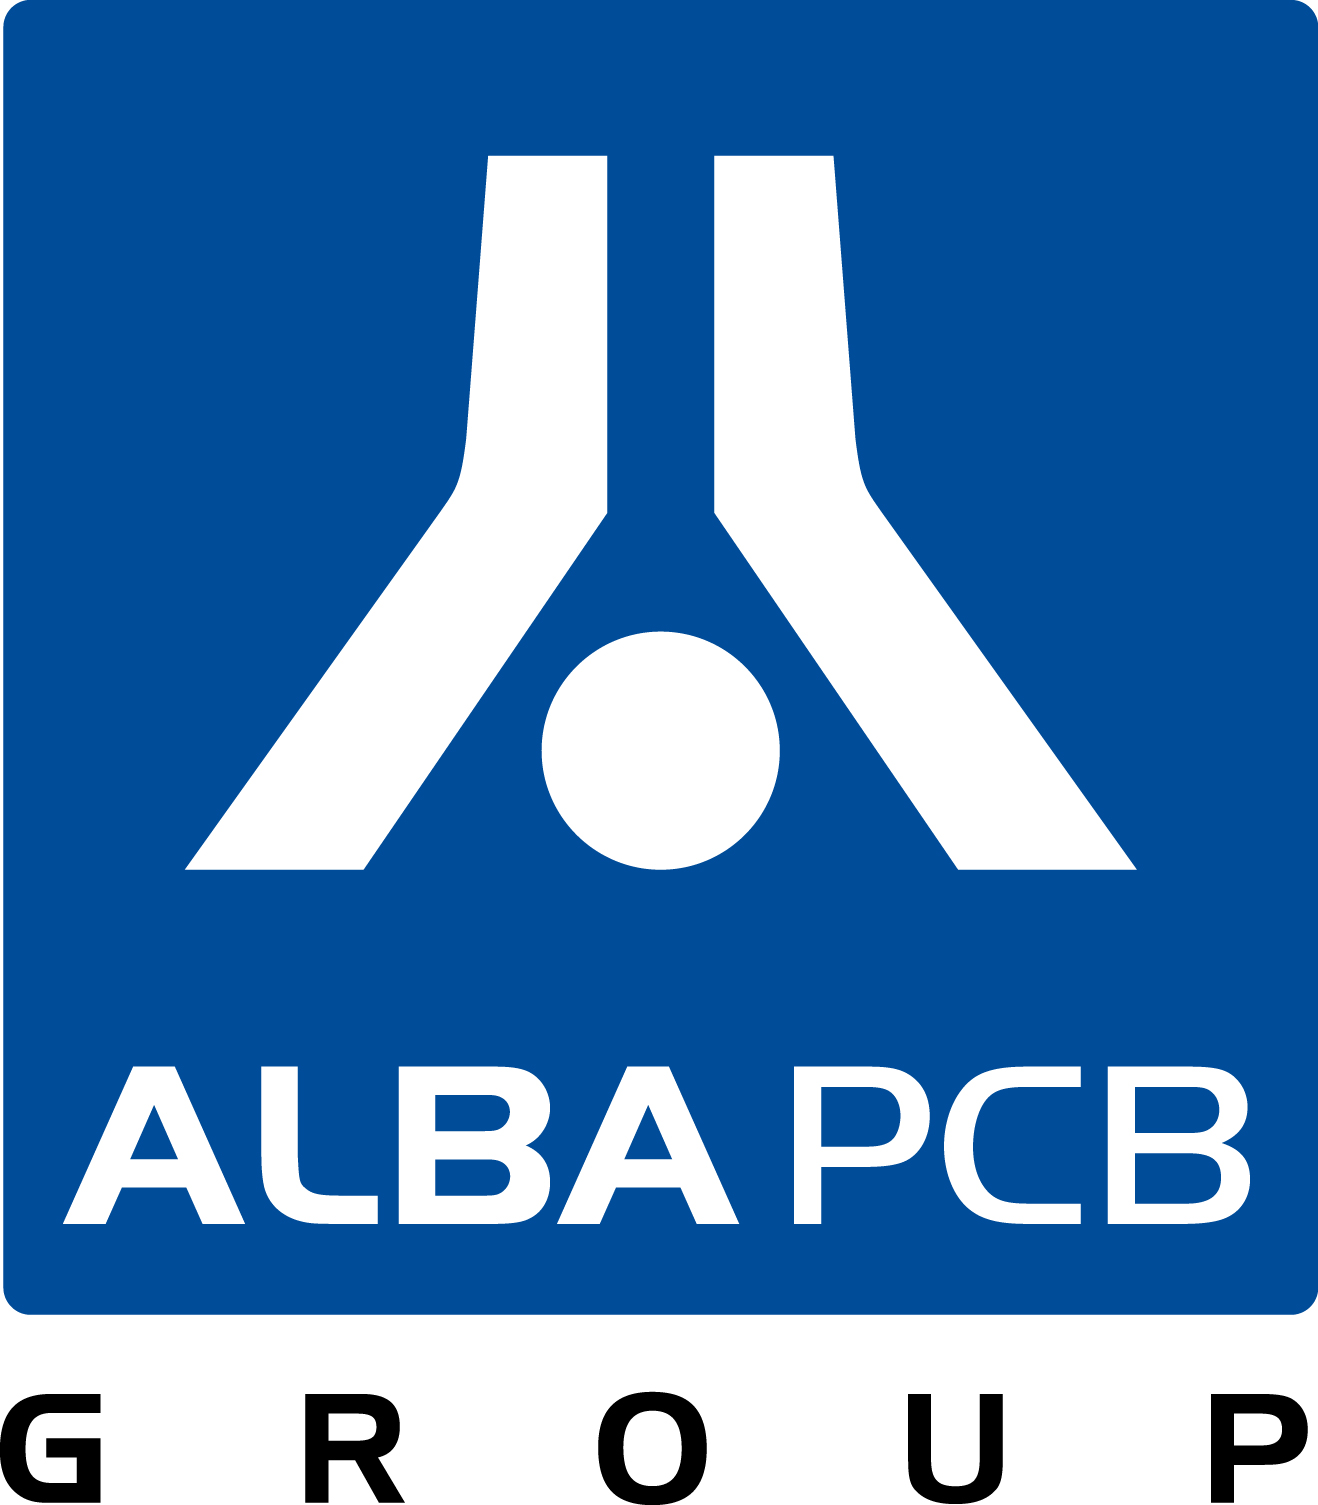 Alba Pcb Group